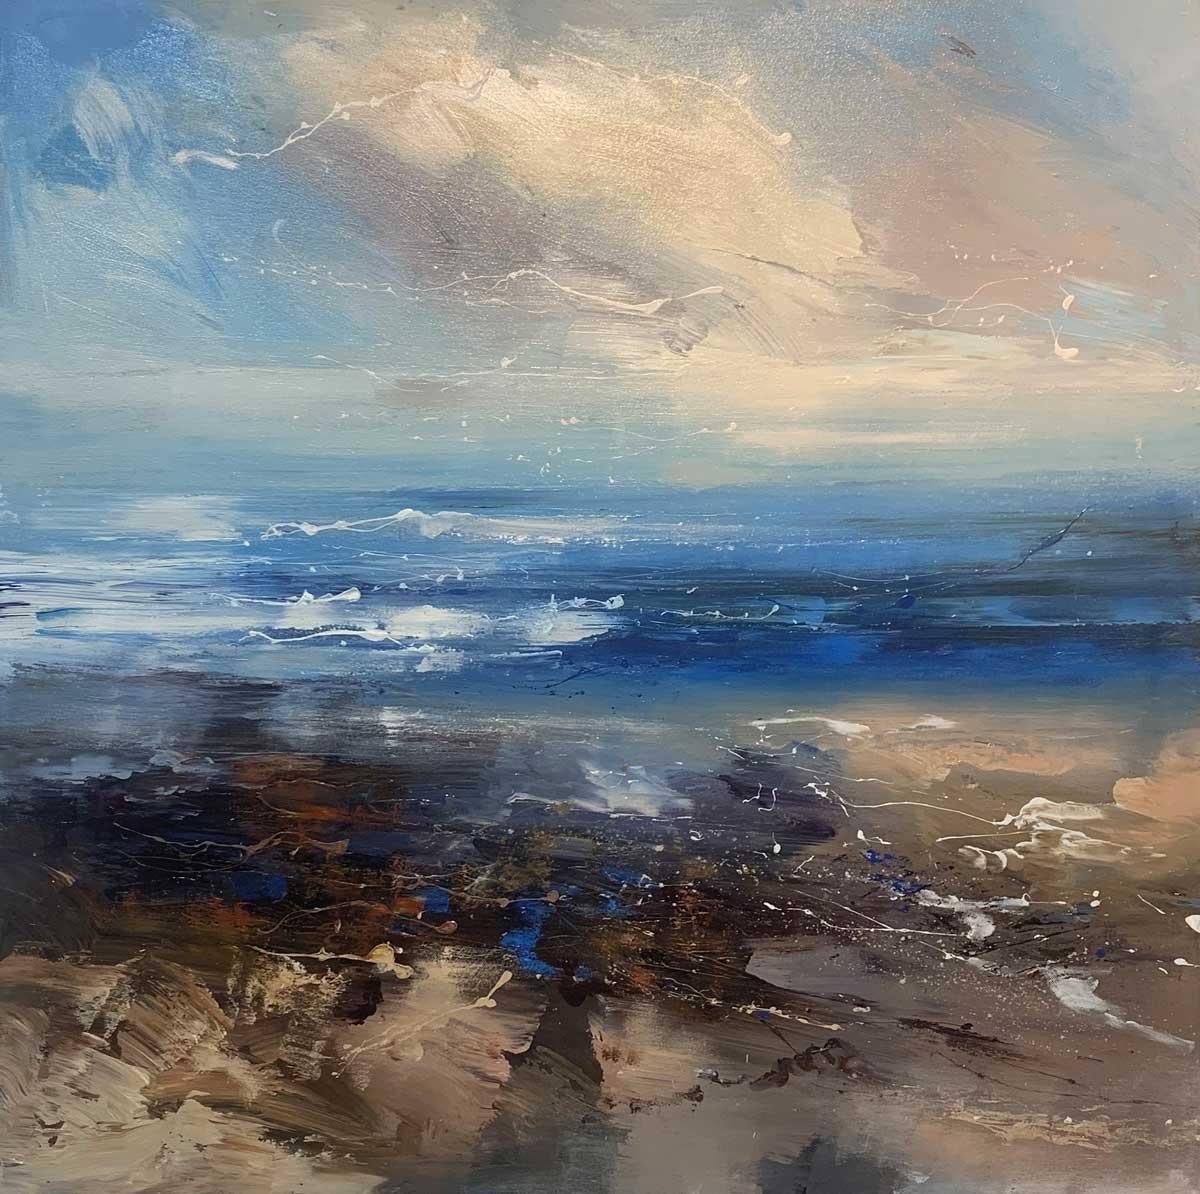 Claire Wiltsher Landscape Painting - The Wave - Contemporary British Seascape: Oil Paint on Canvas